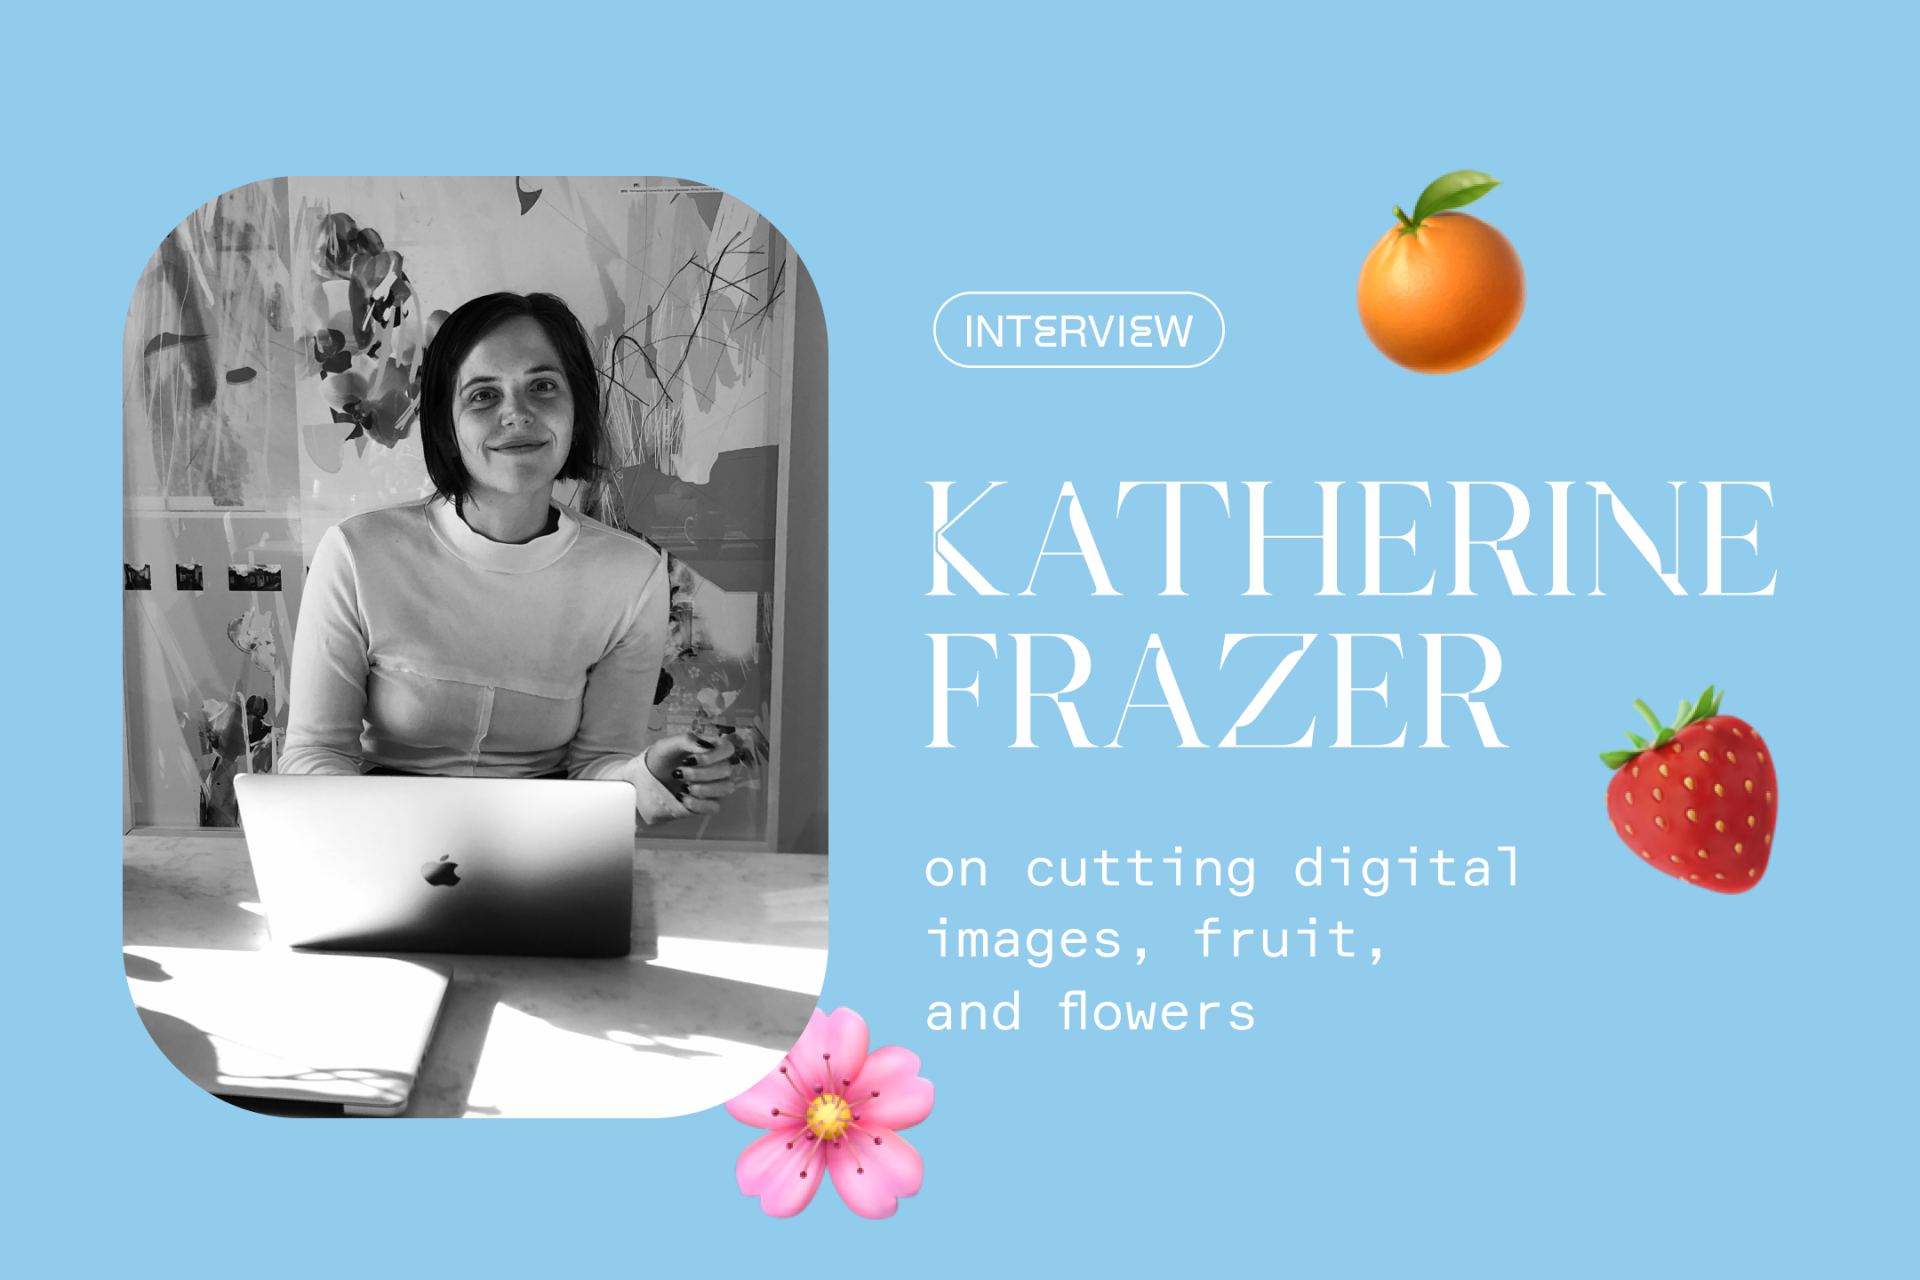 Katherine Frazer on cutting digital images, fruit, and flowers.